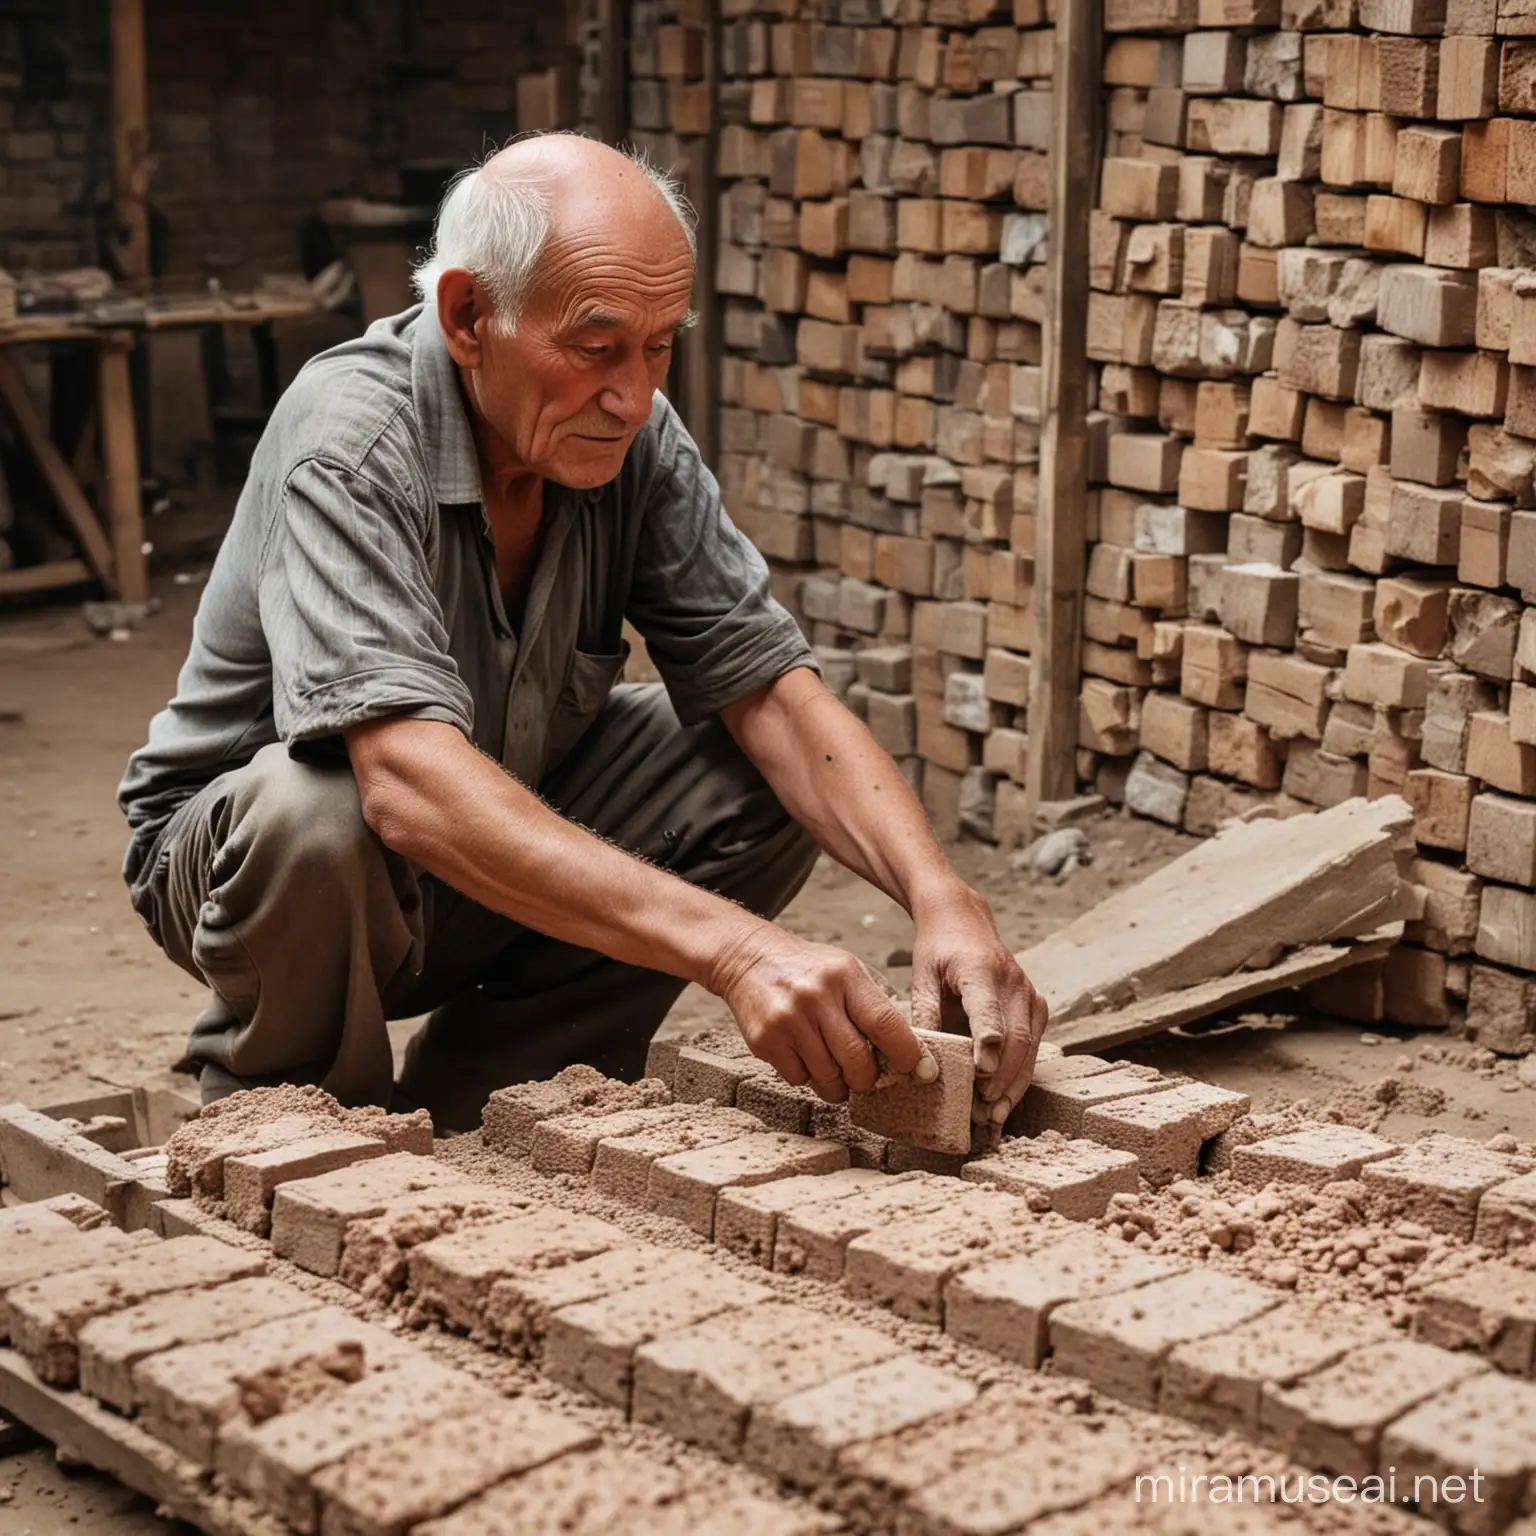 Elderly Craftsman Handcrafting Grain Bricks in Traditional Workshop